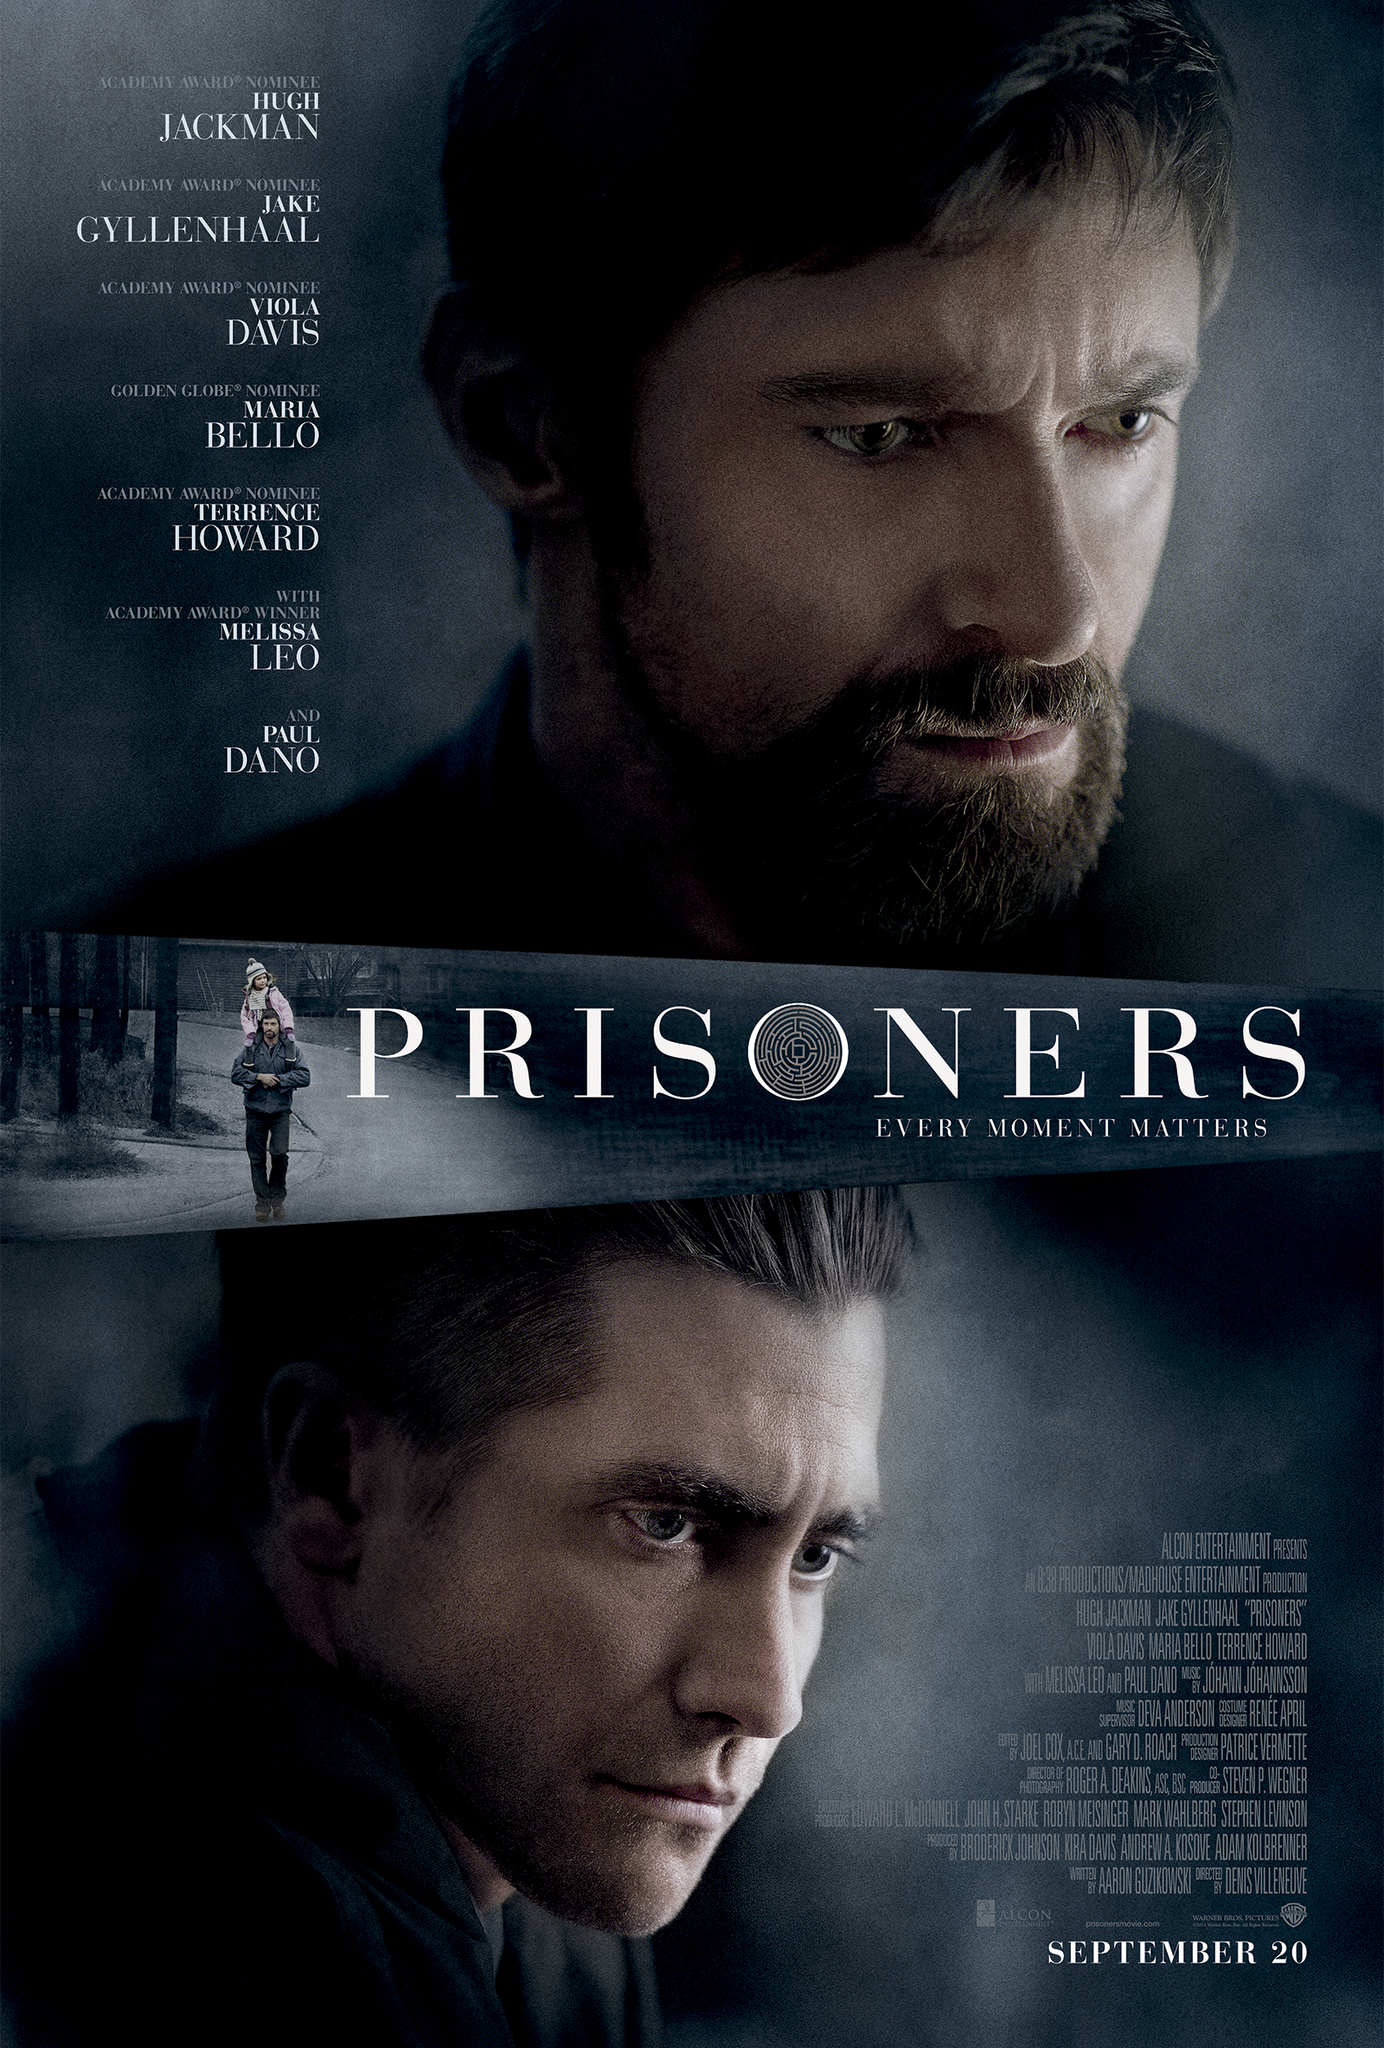 Prisoners (2013) ★★★★☆